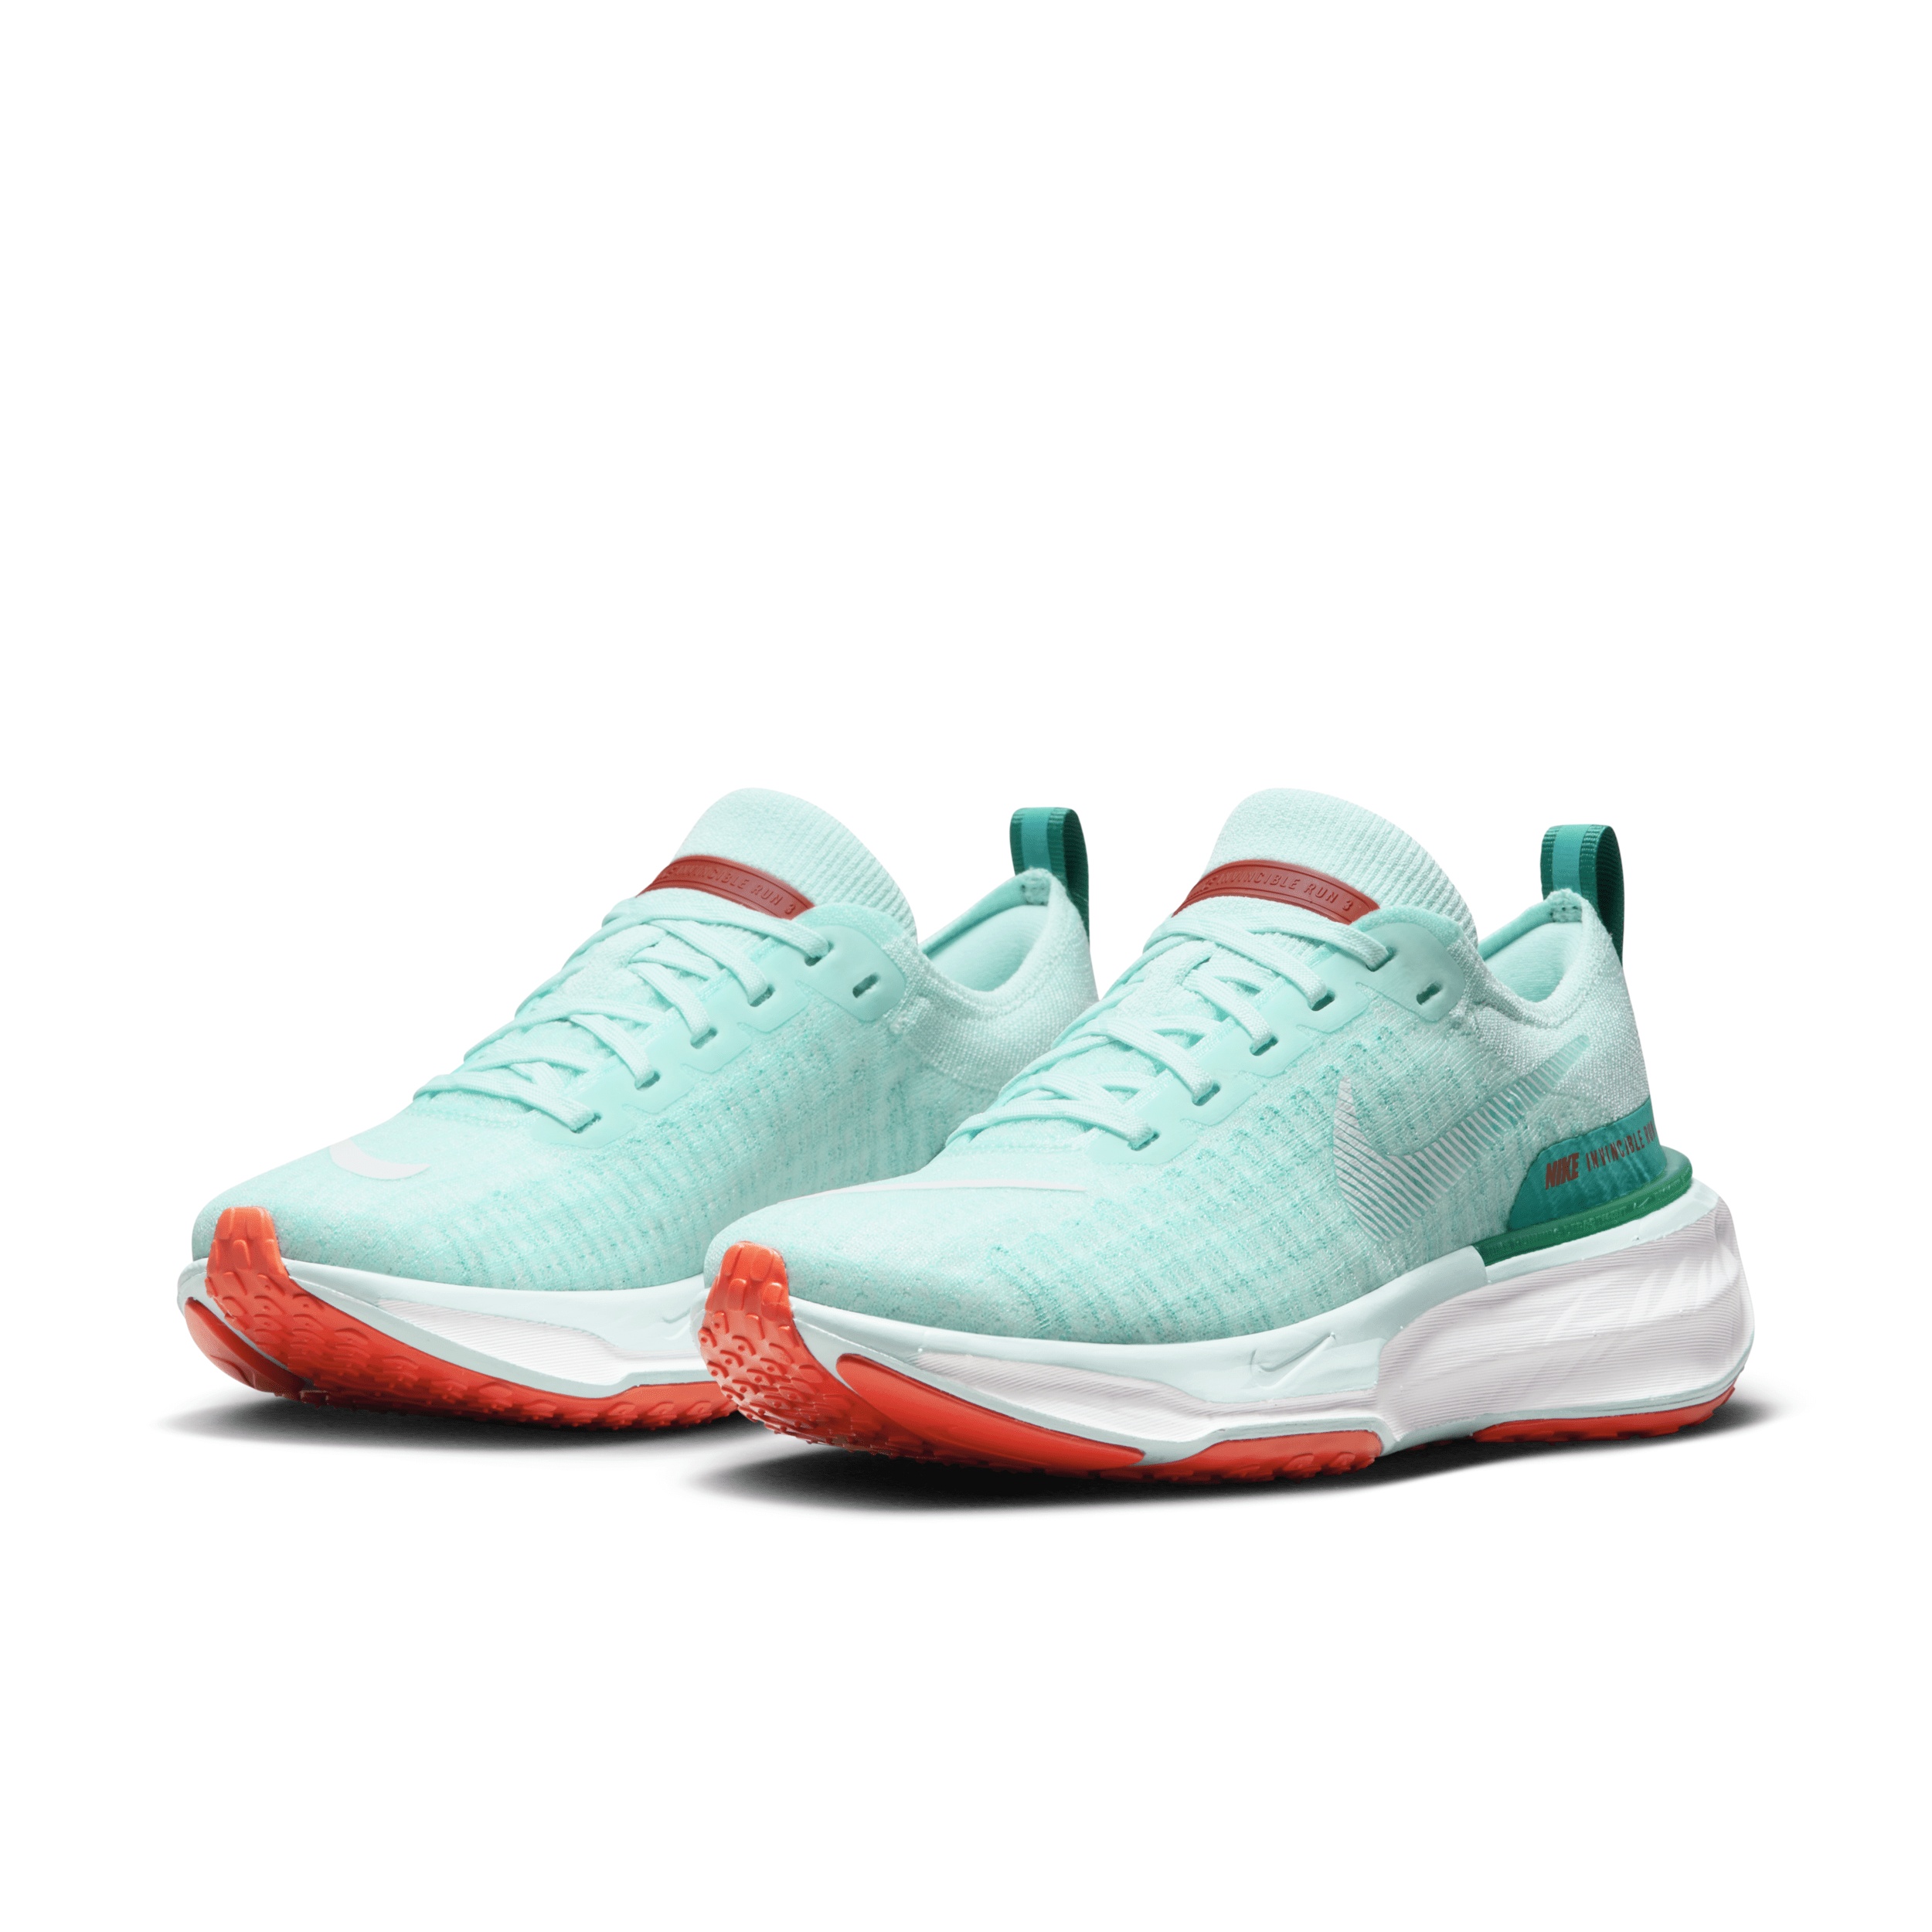 Nike Women's Invincible 3 Road Running Shoes - 5